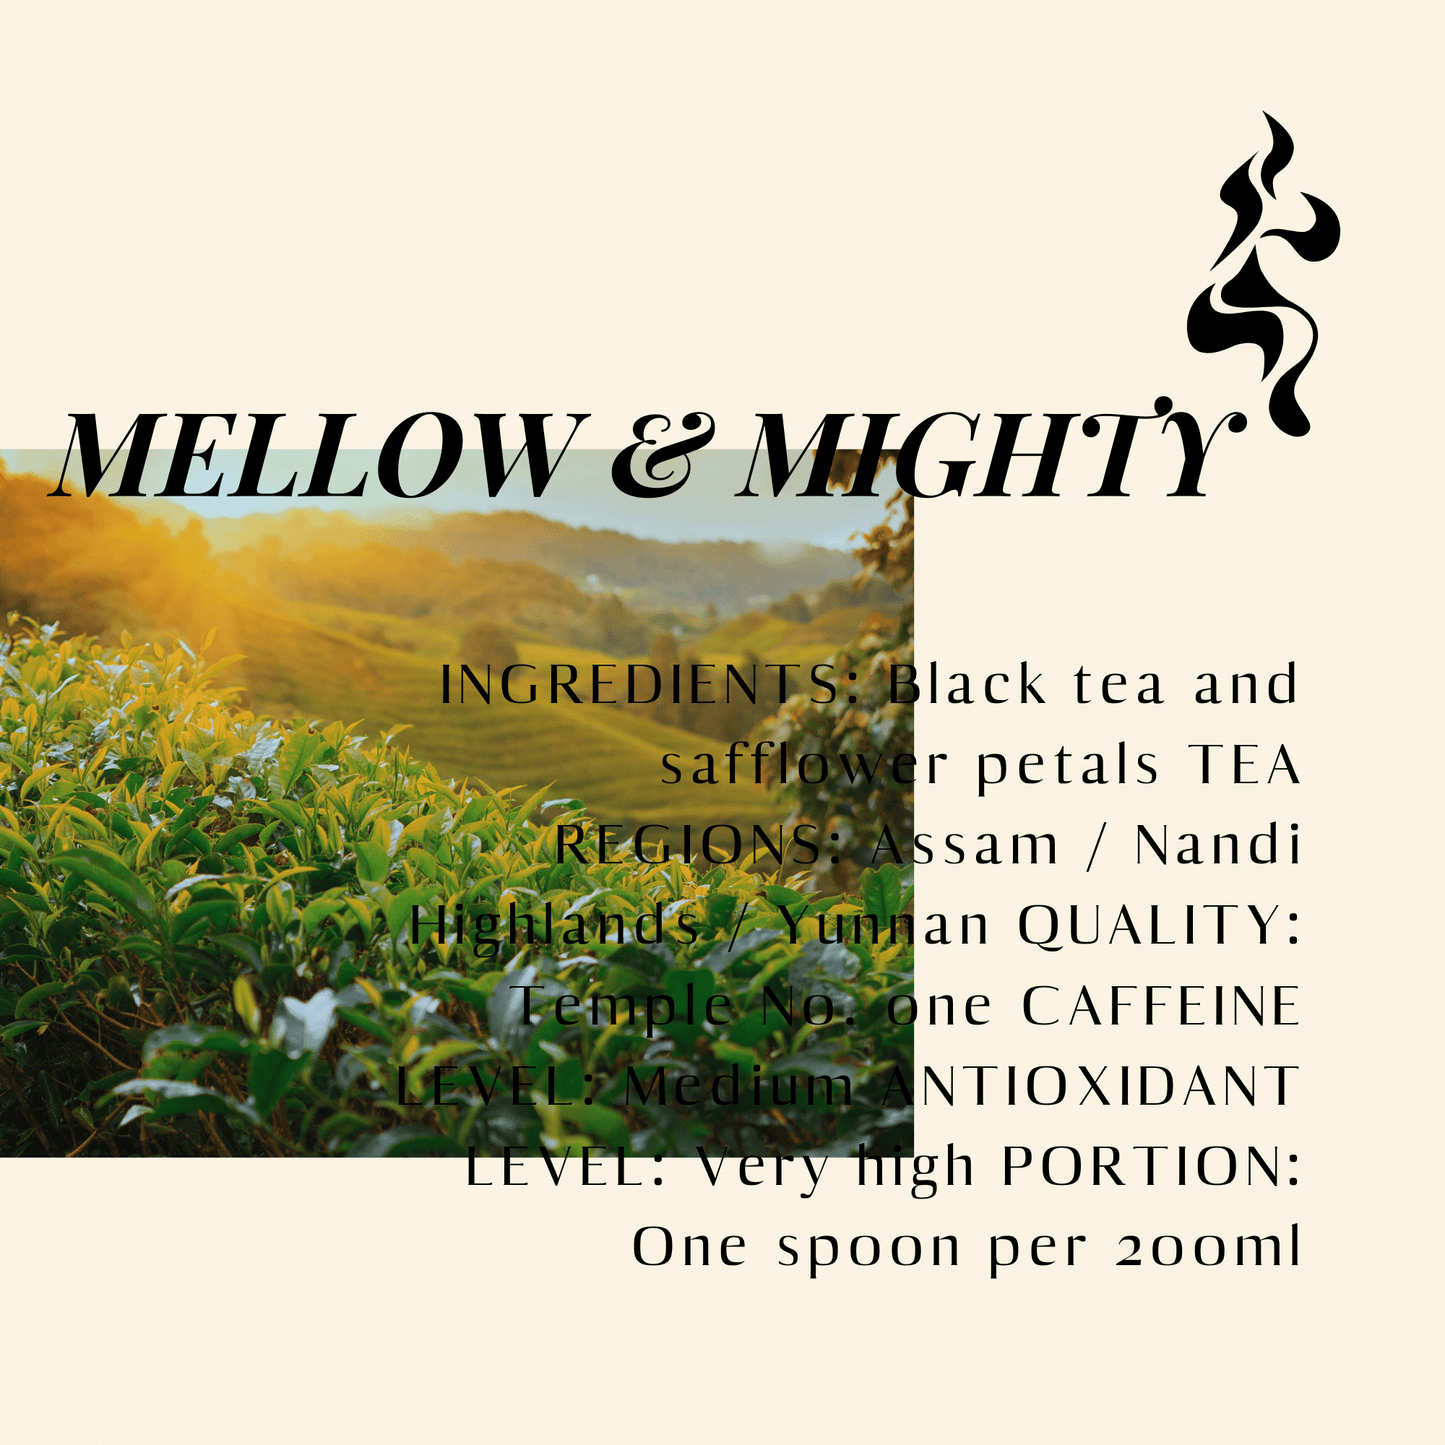 Mellow & Mighty. Black Tea. Details ->